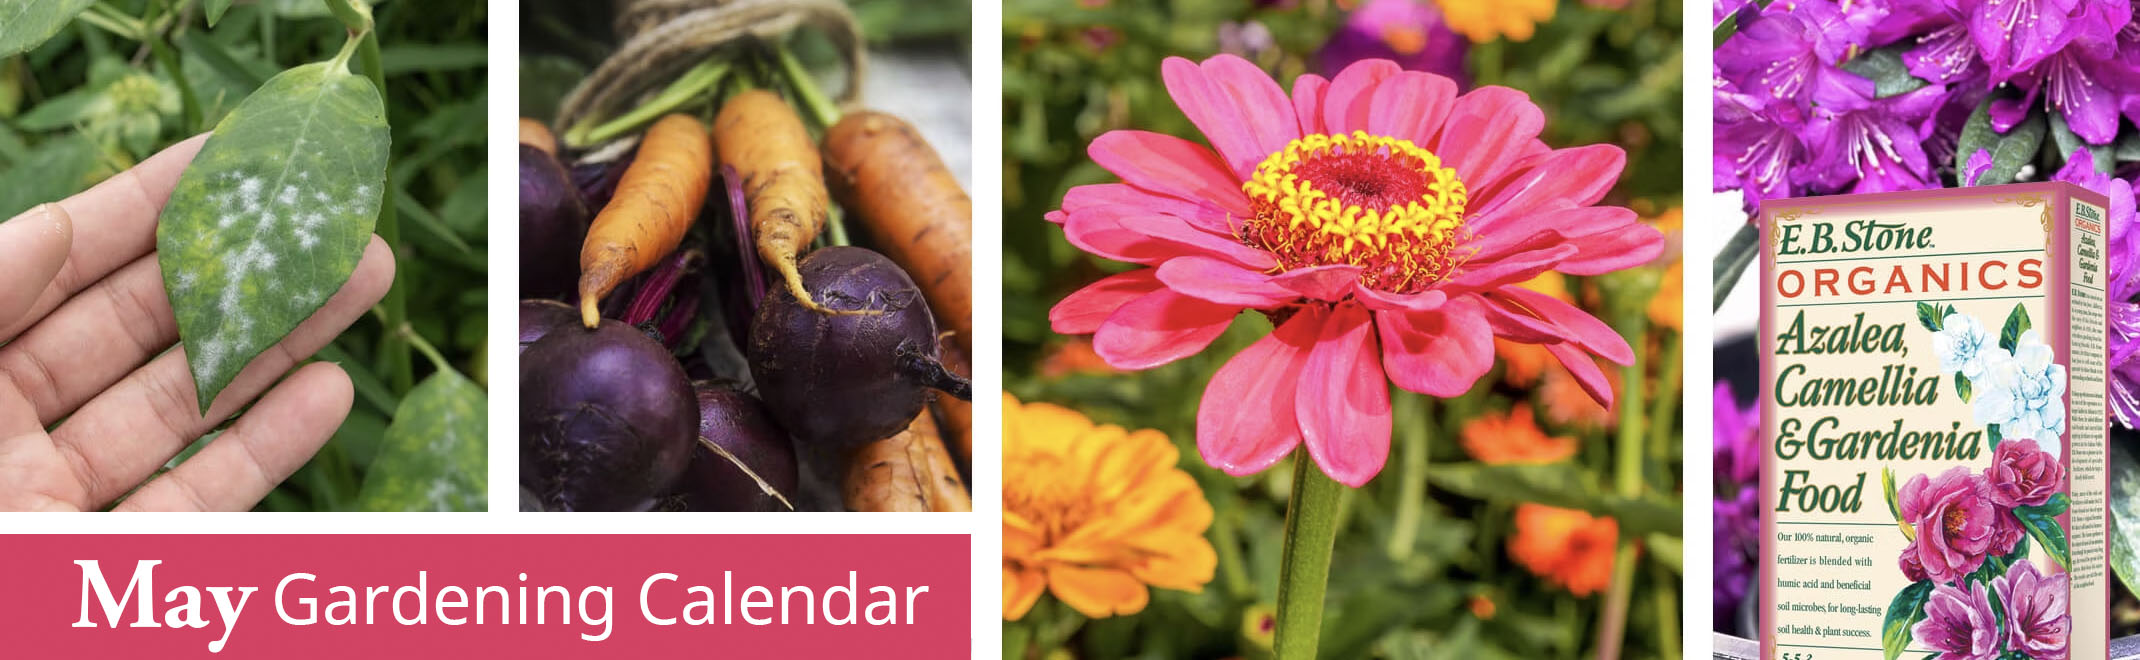 may gardening calendar items winter veggies, zinnia, mold on leaf and fertilzer